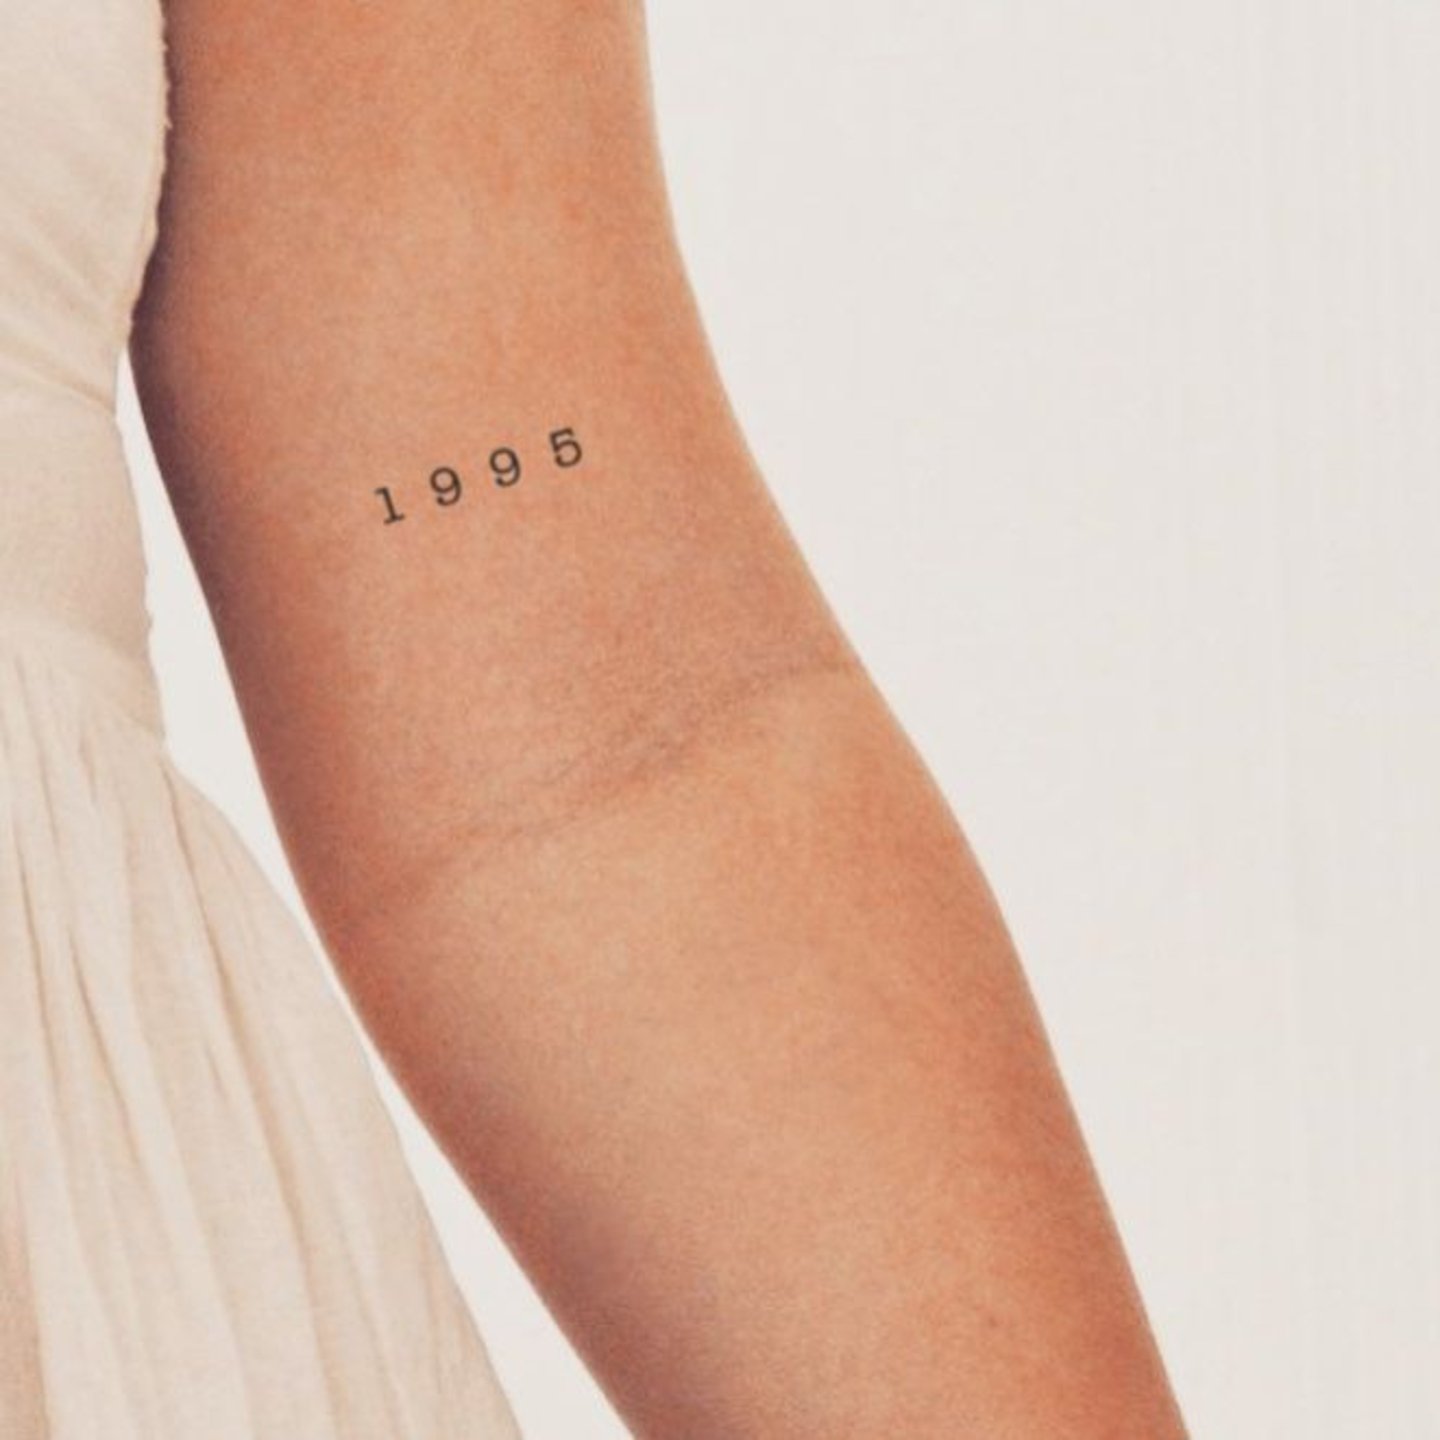 Año 1995 tatuaje